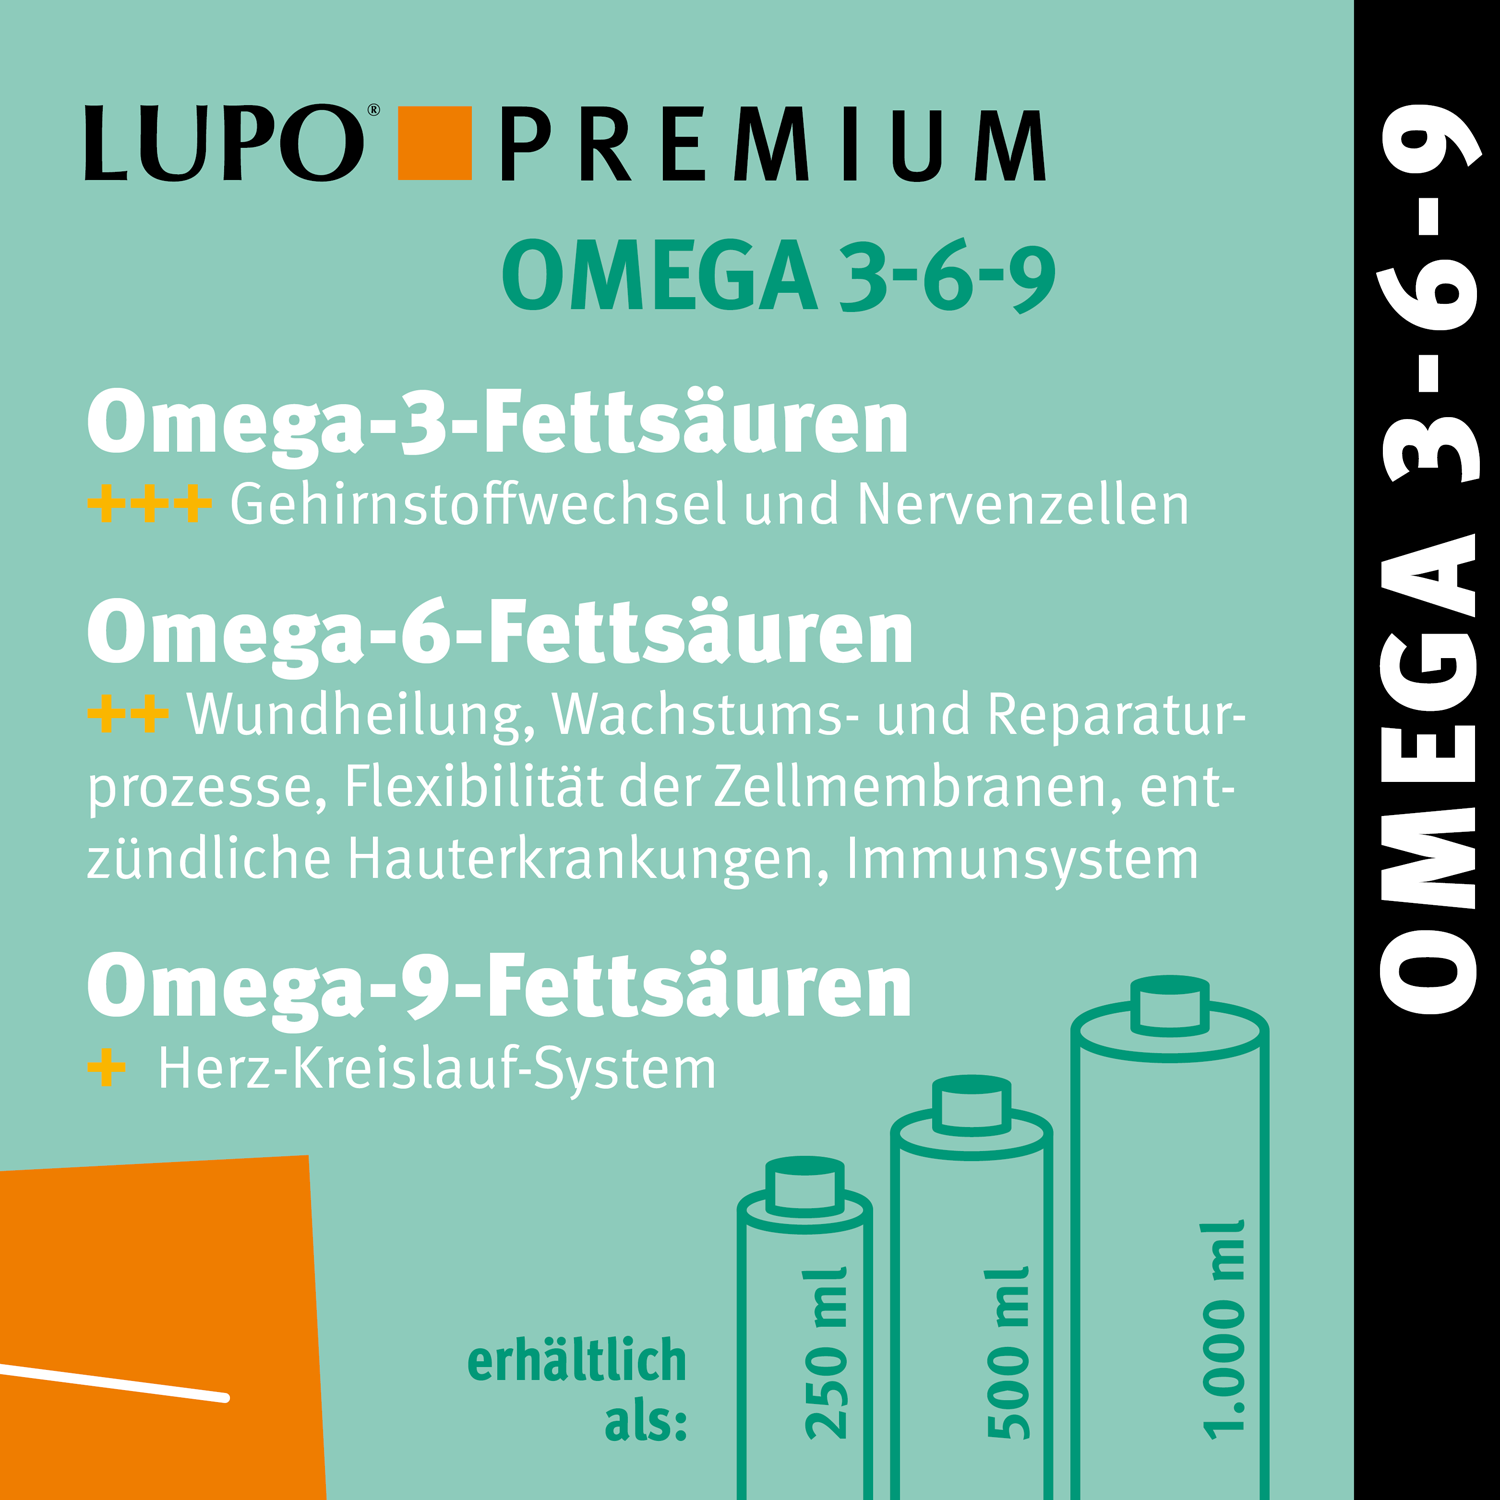 LUPO OMEGA 369 Premium 250 ml